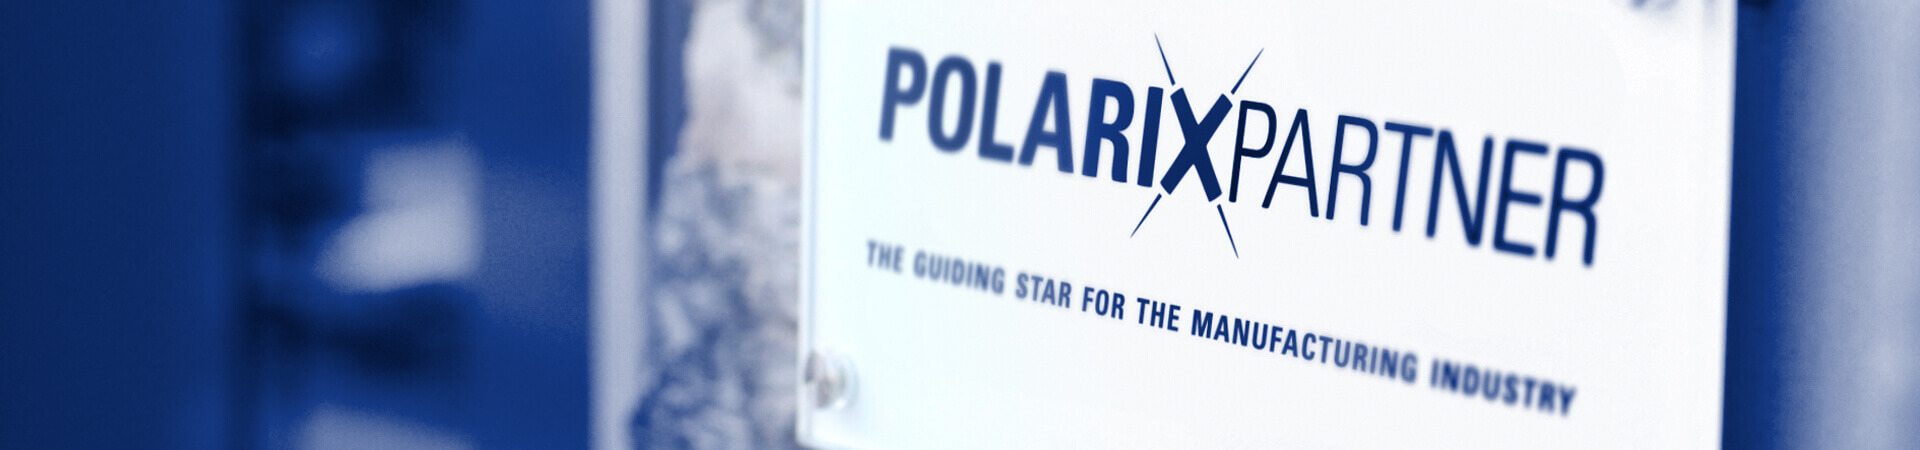 Polarixpartner Partnerschaft - Partnerships